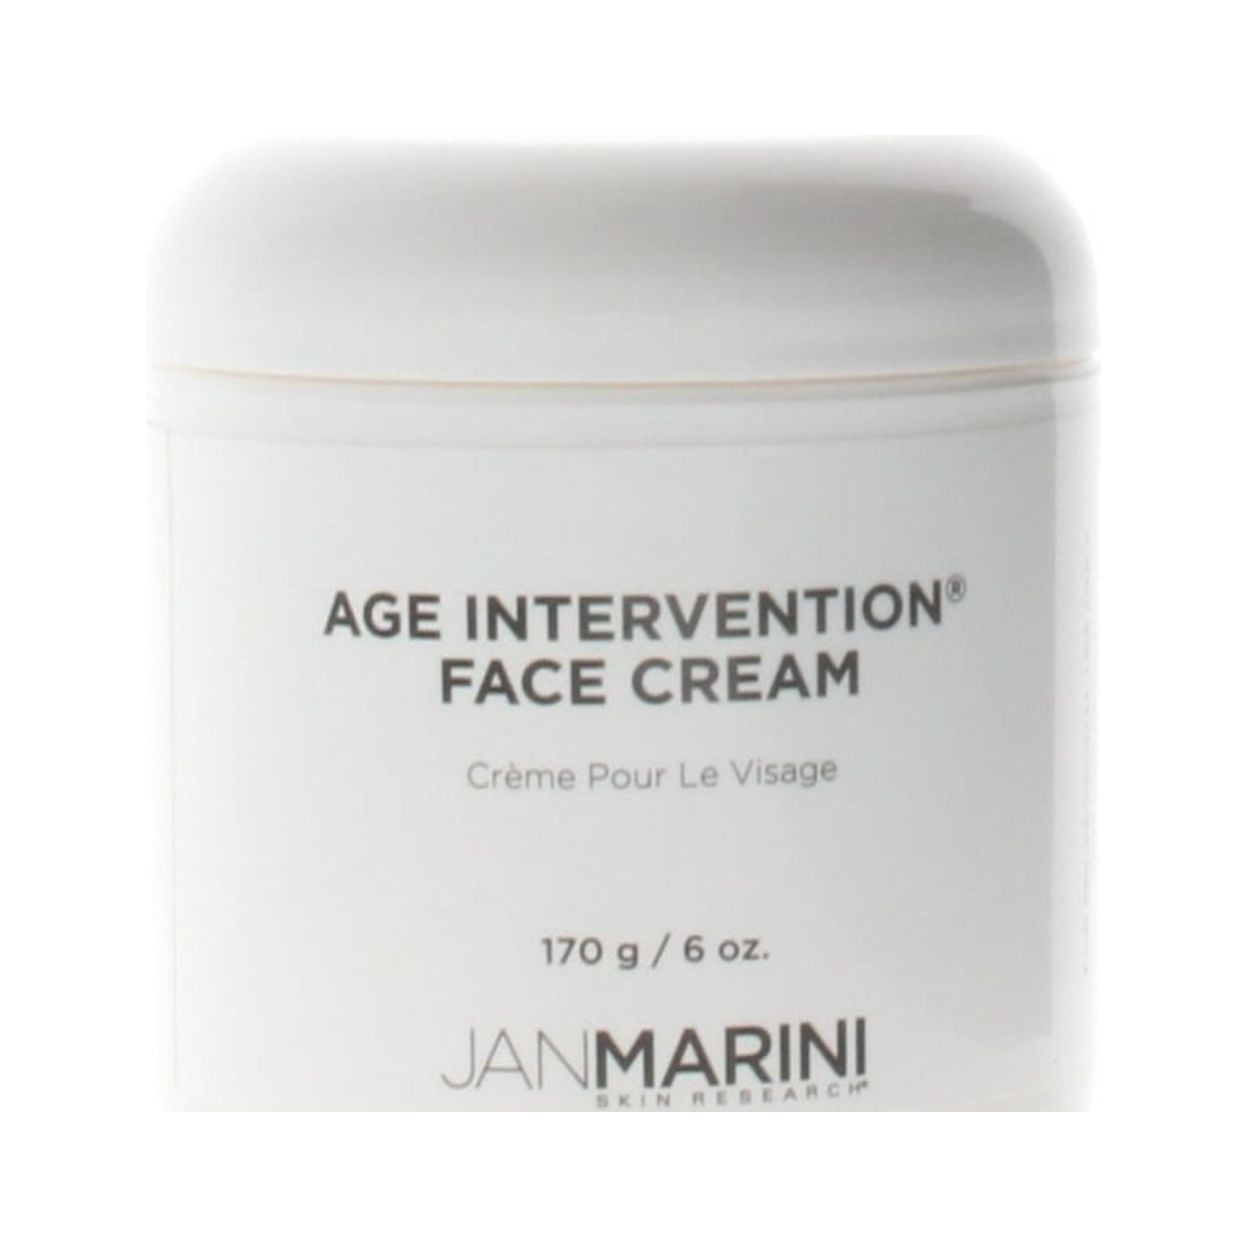 URIAGE Age Lift Peel - crème de nuit peau neuve 50ml - Parapharmacie Prado  Mermoz